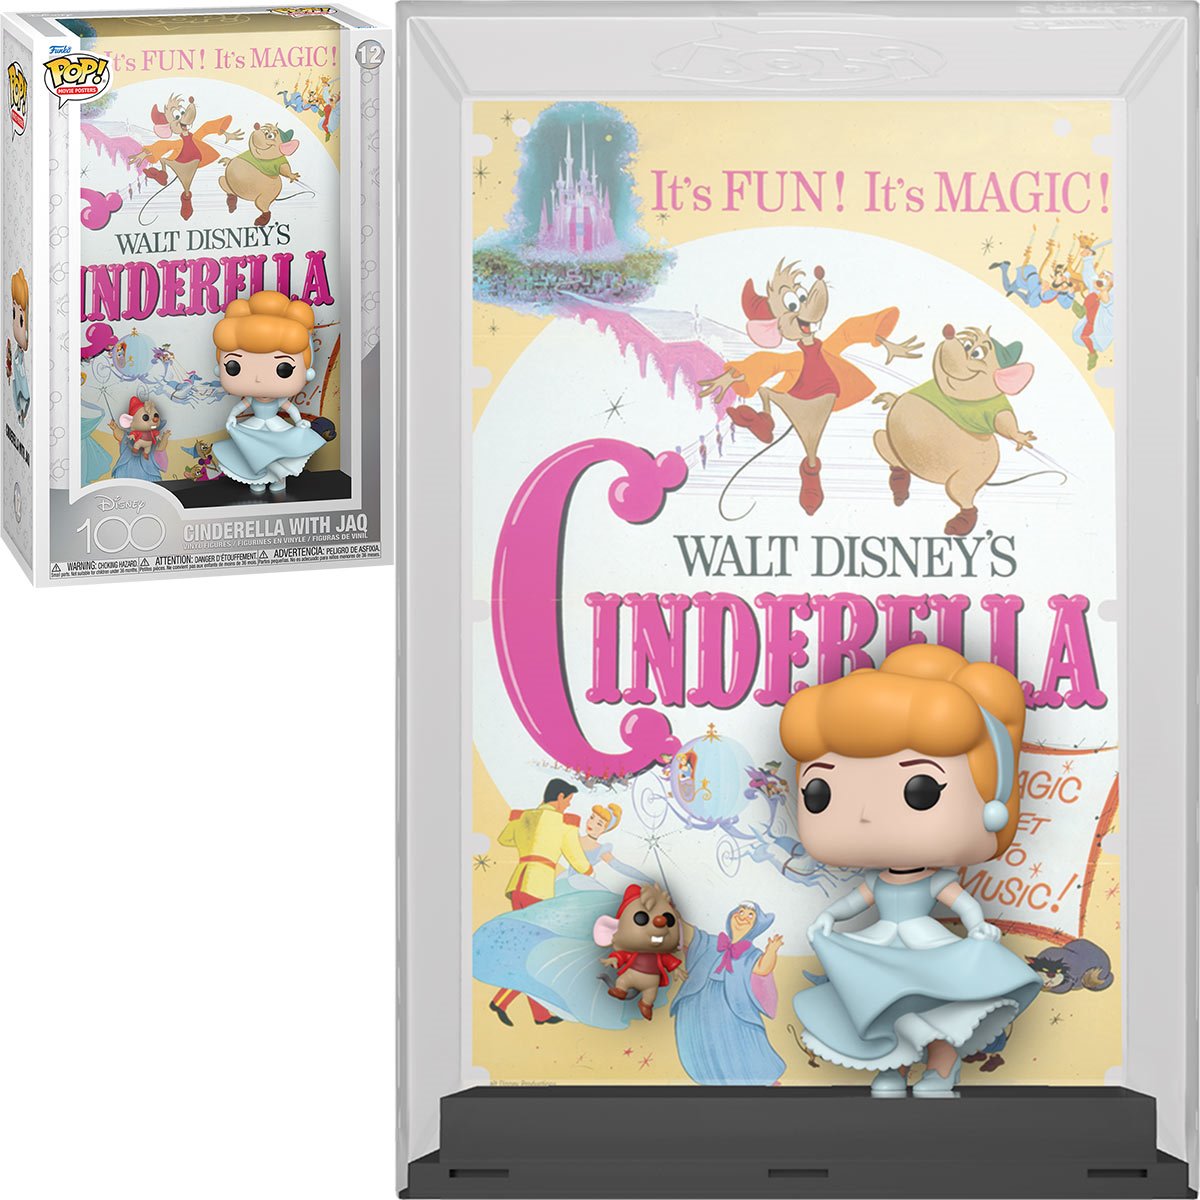 Disney 100 Cinderella with Jaq Funko Pop! Movie Poster with Case #12